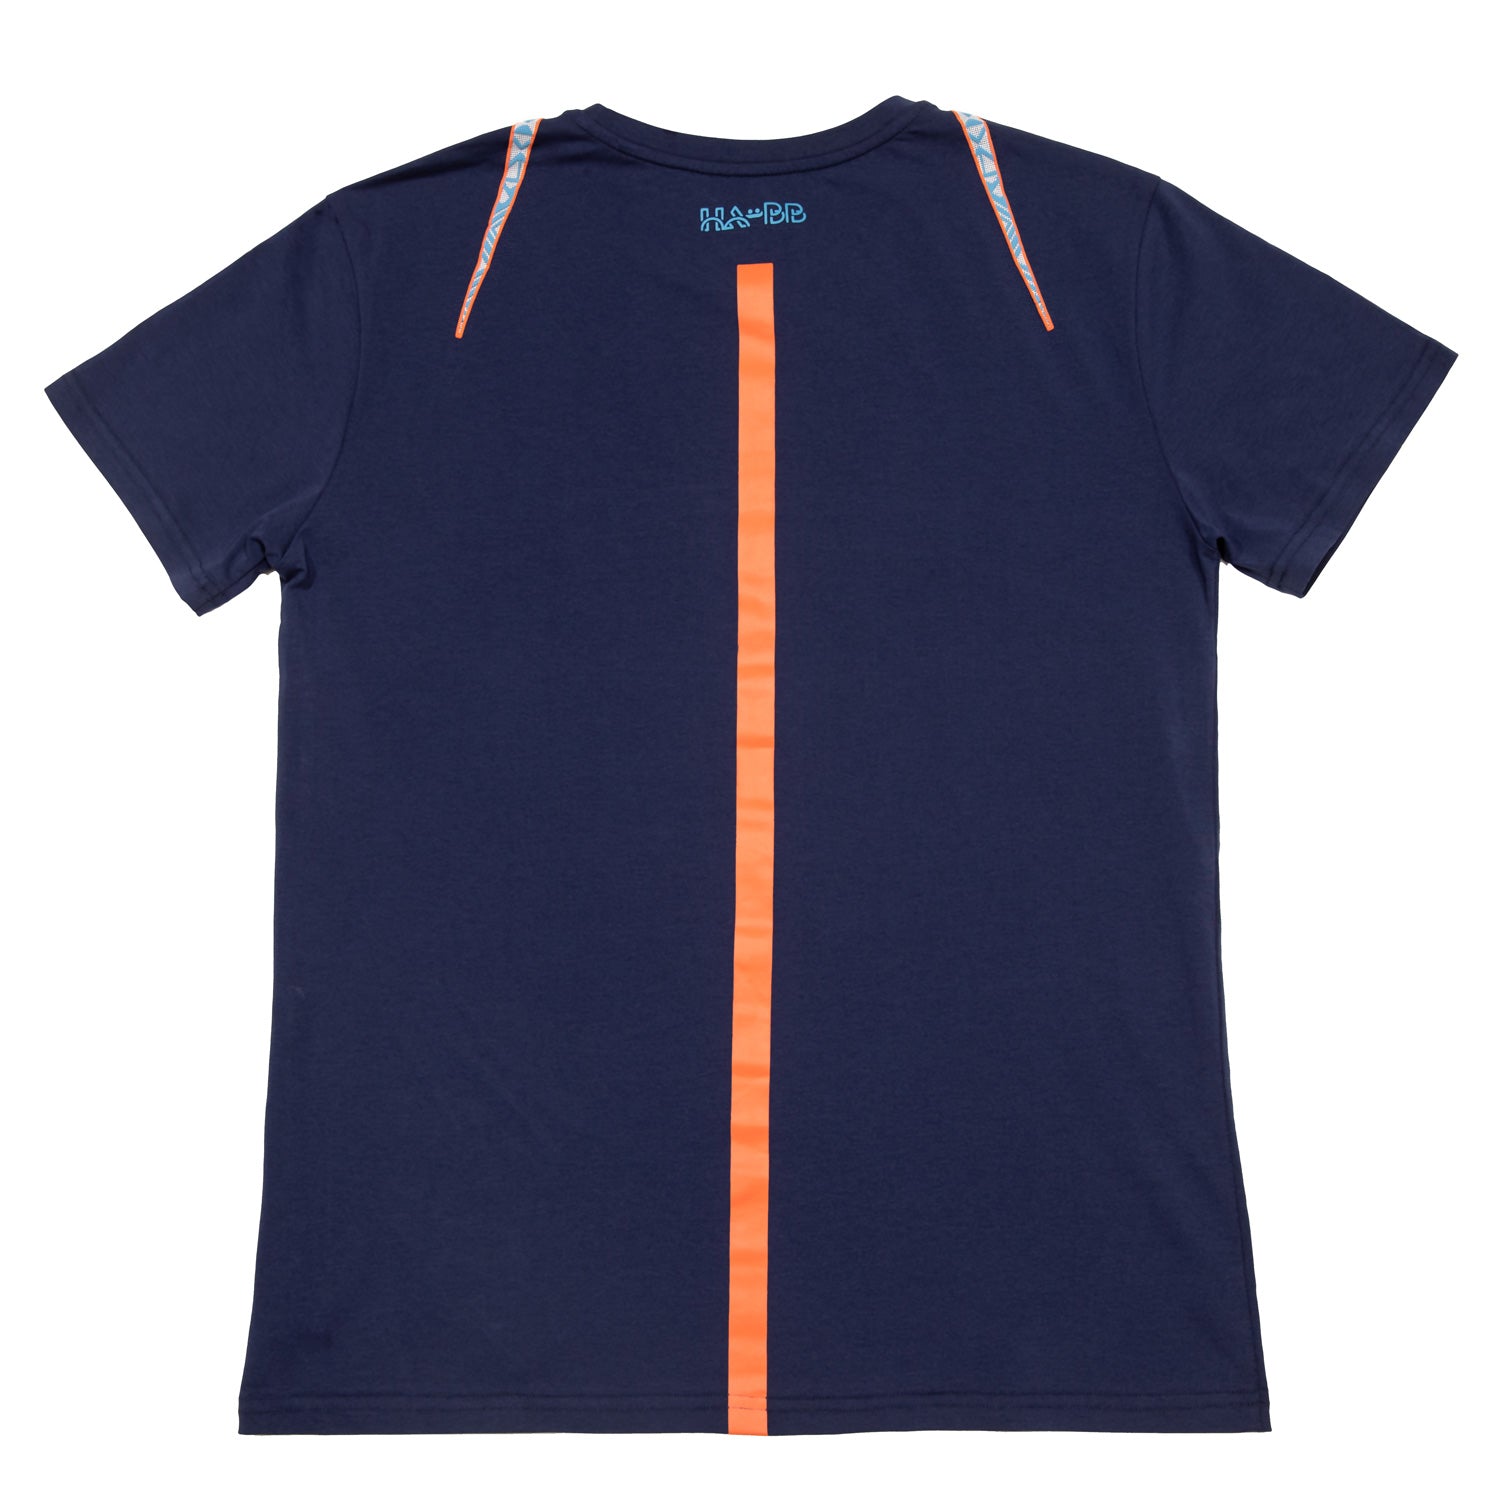 Oryx, Tradition, WWF, blue t-shirt, tee, blue, orange print, man, back view, 